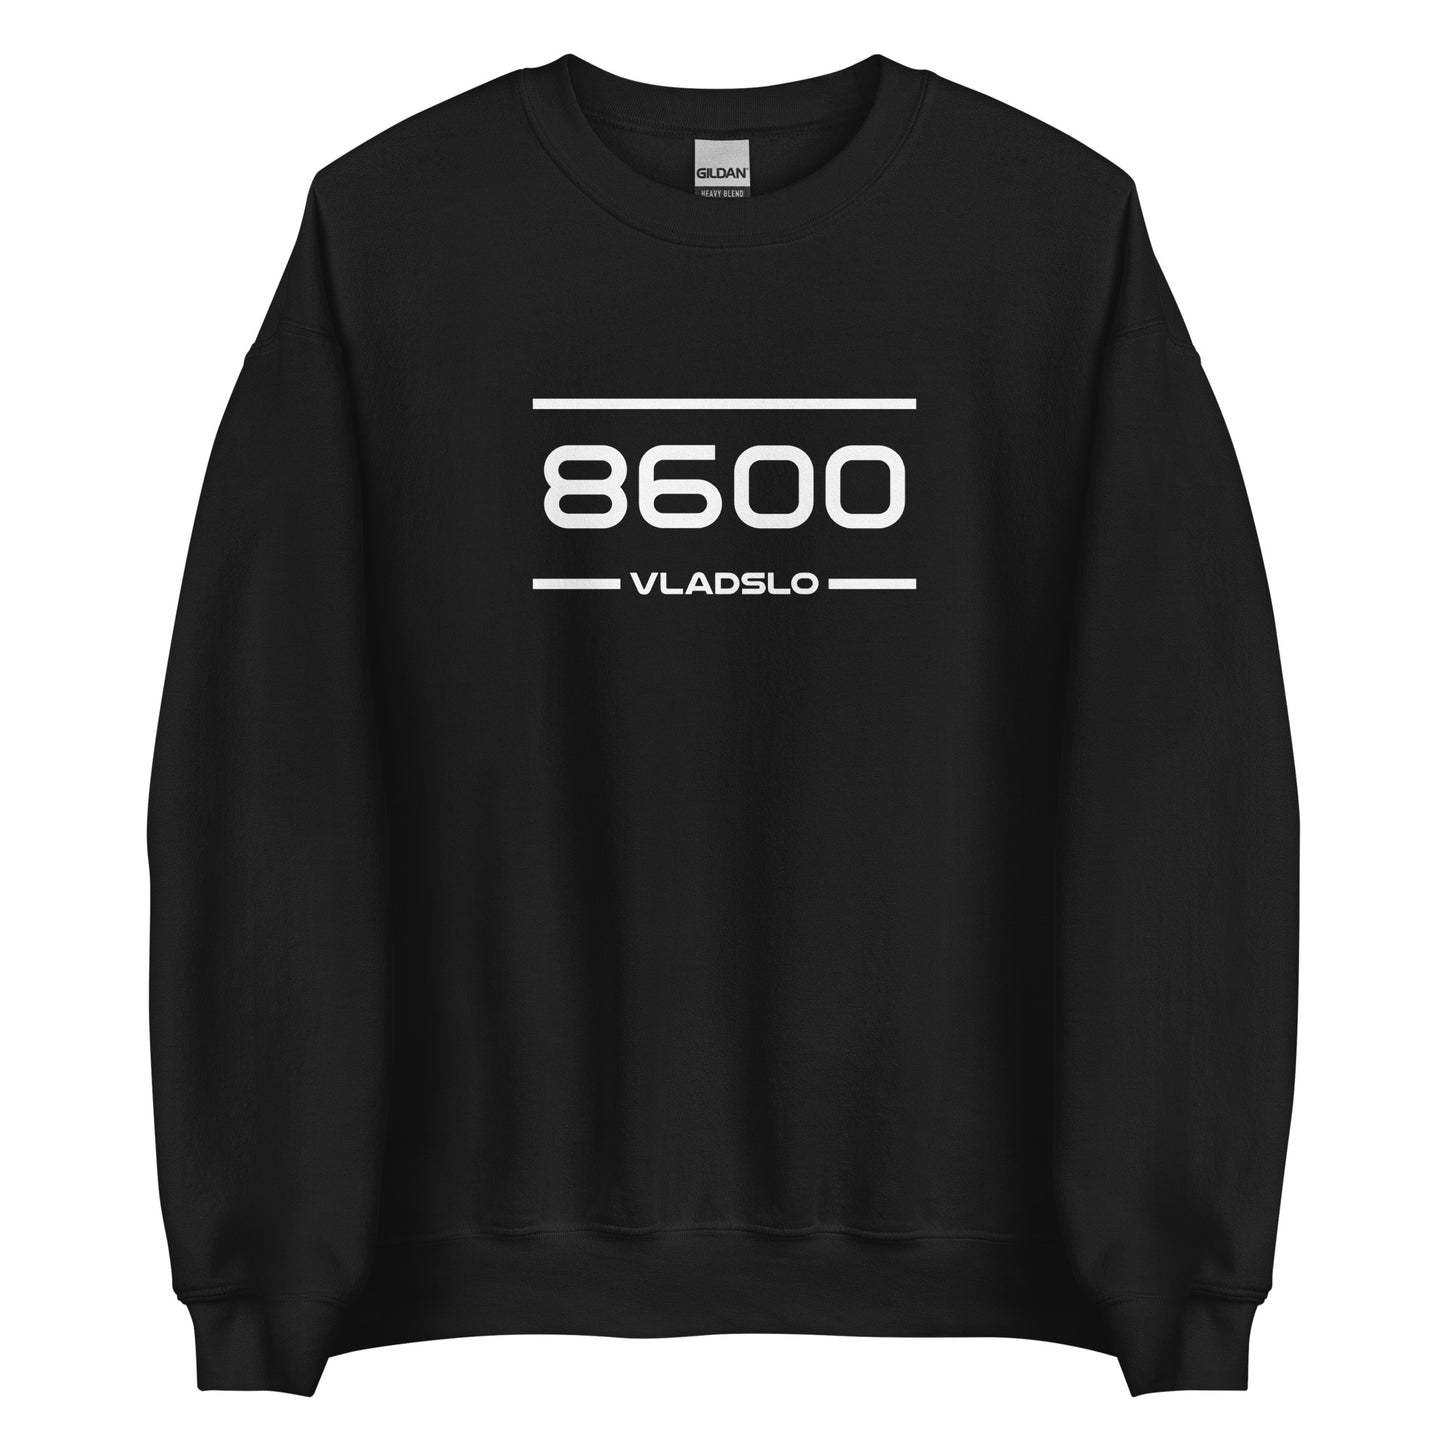 Sweater - 8600 - Vladslo (M/V)